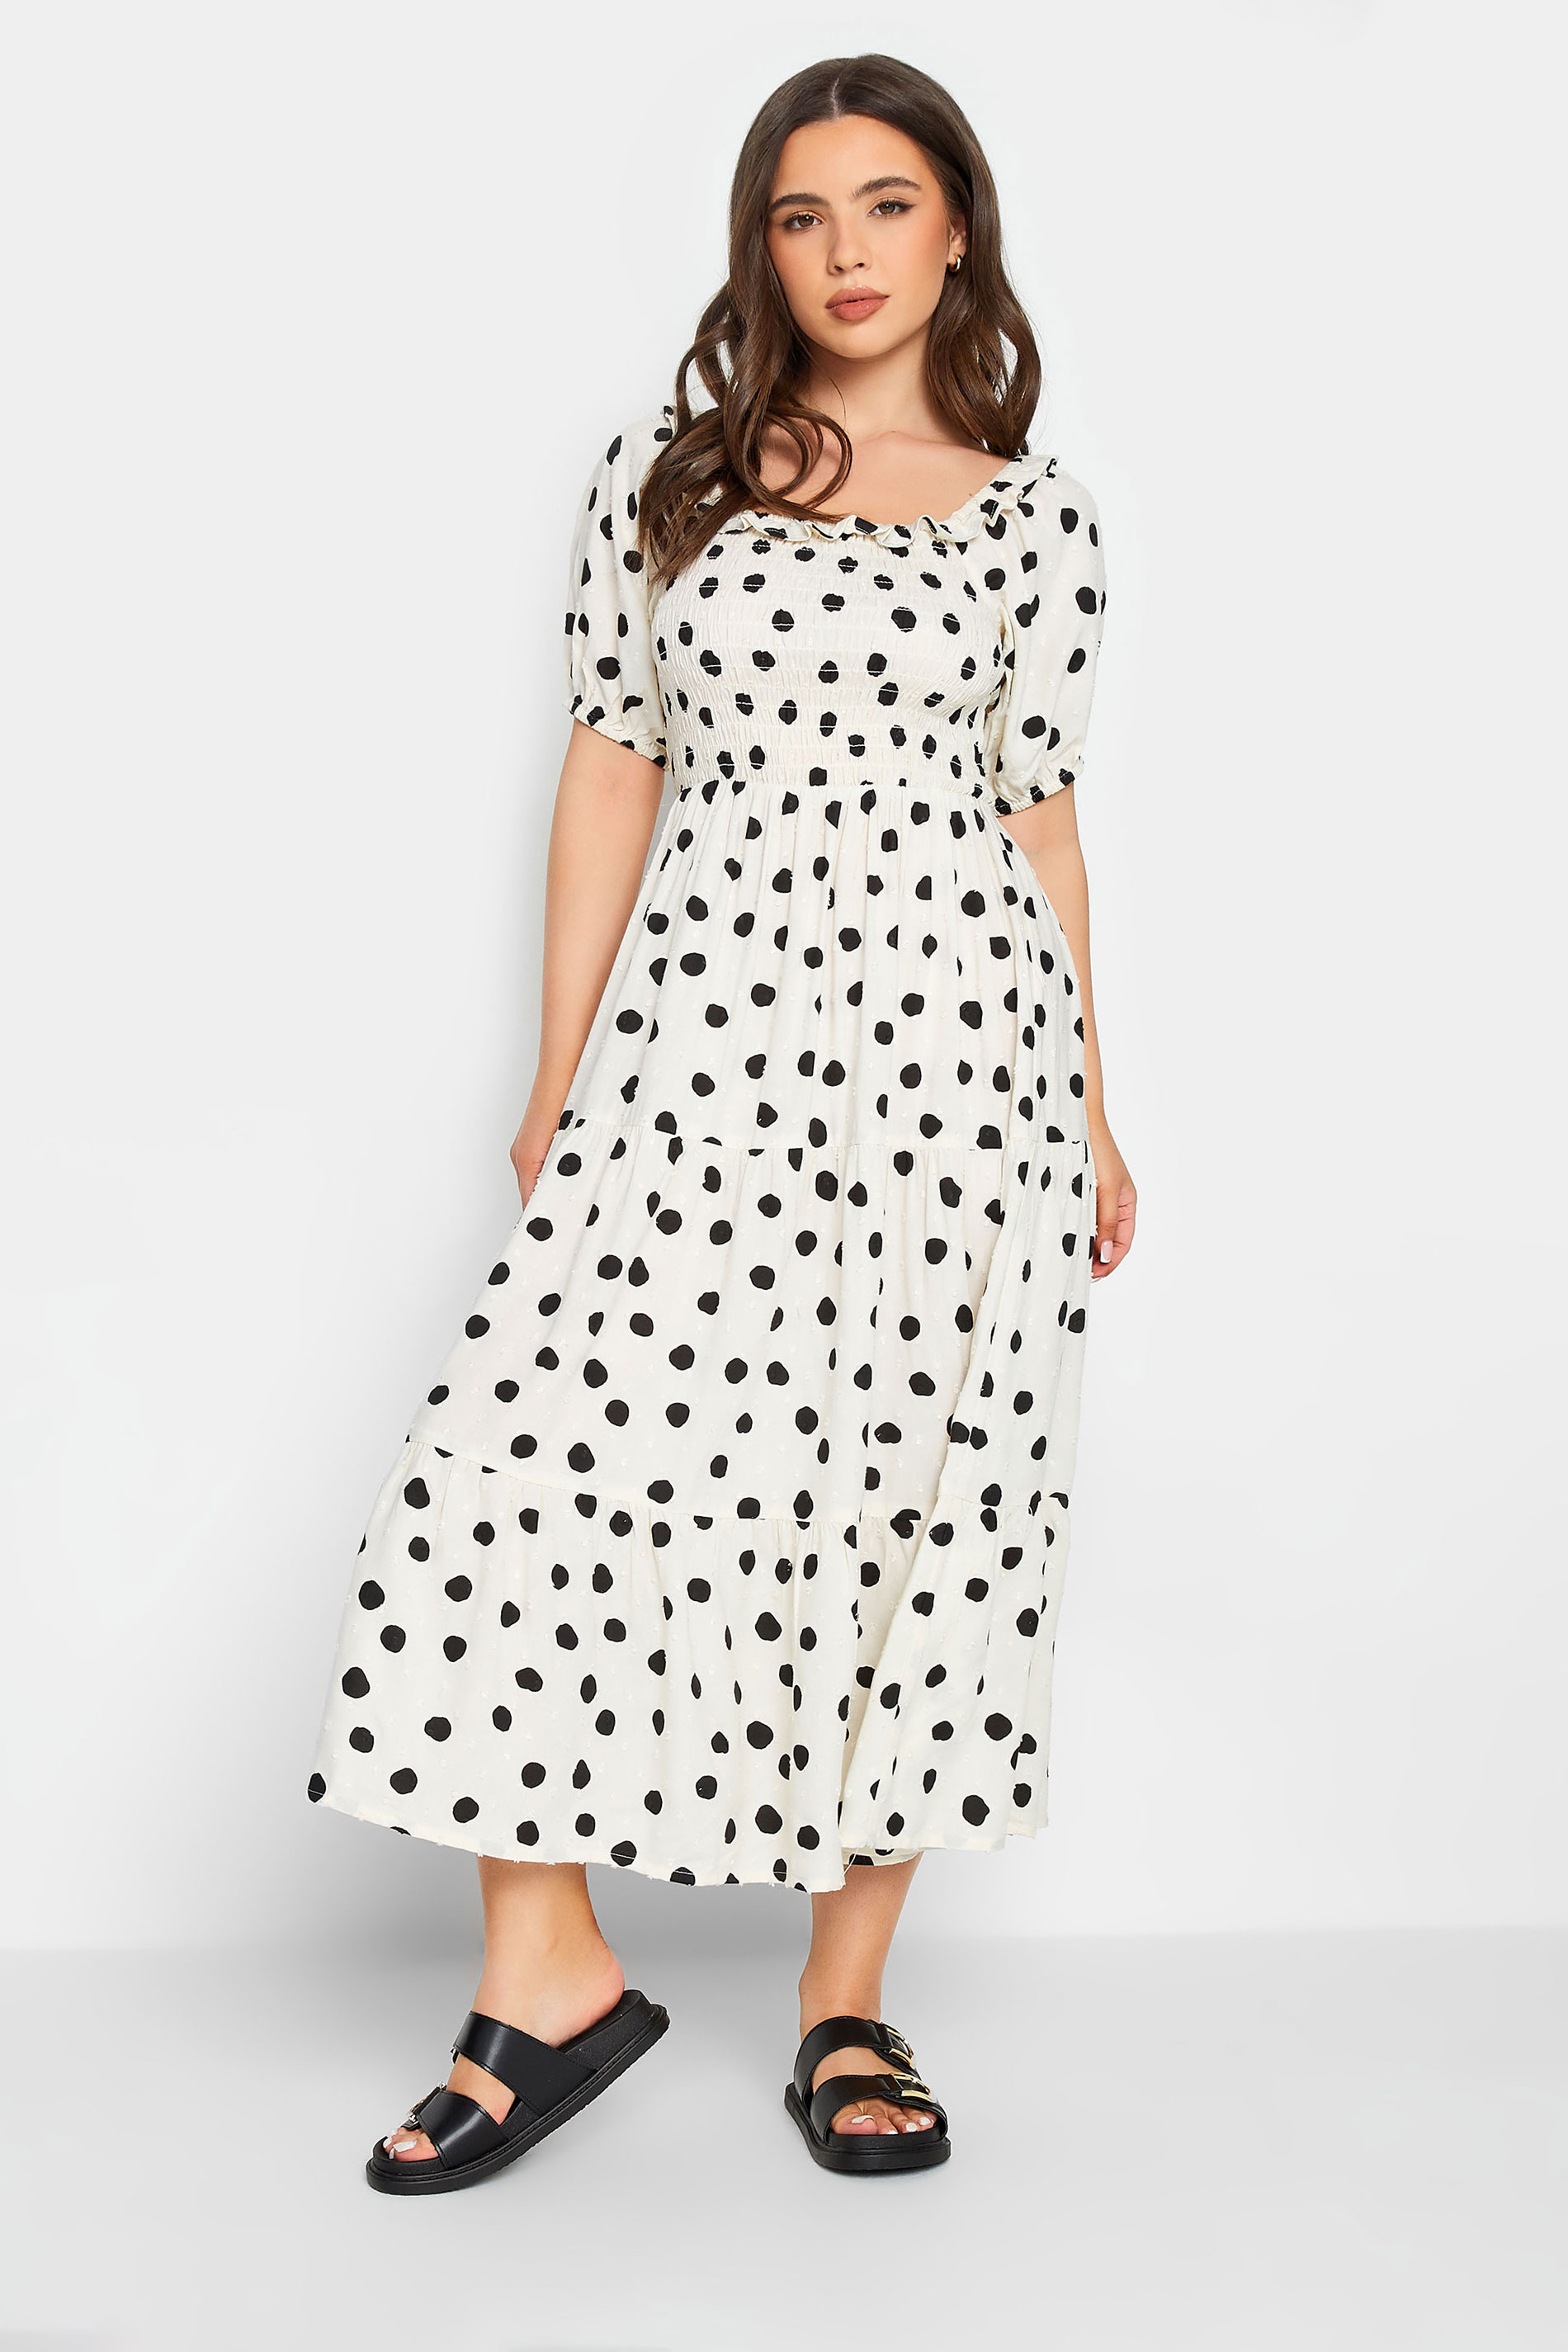 PixieGirl White Polka Dot Puff Sleeve Maxi Dress | PixieGirl 1